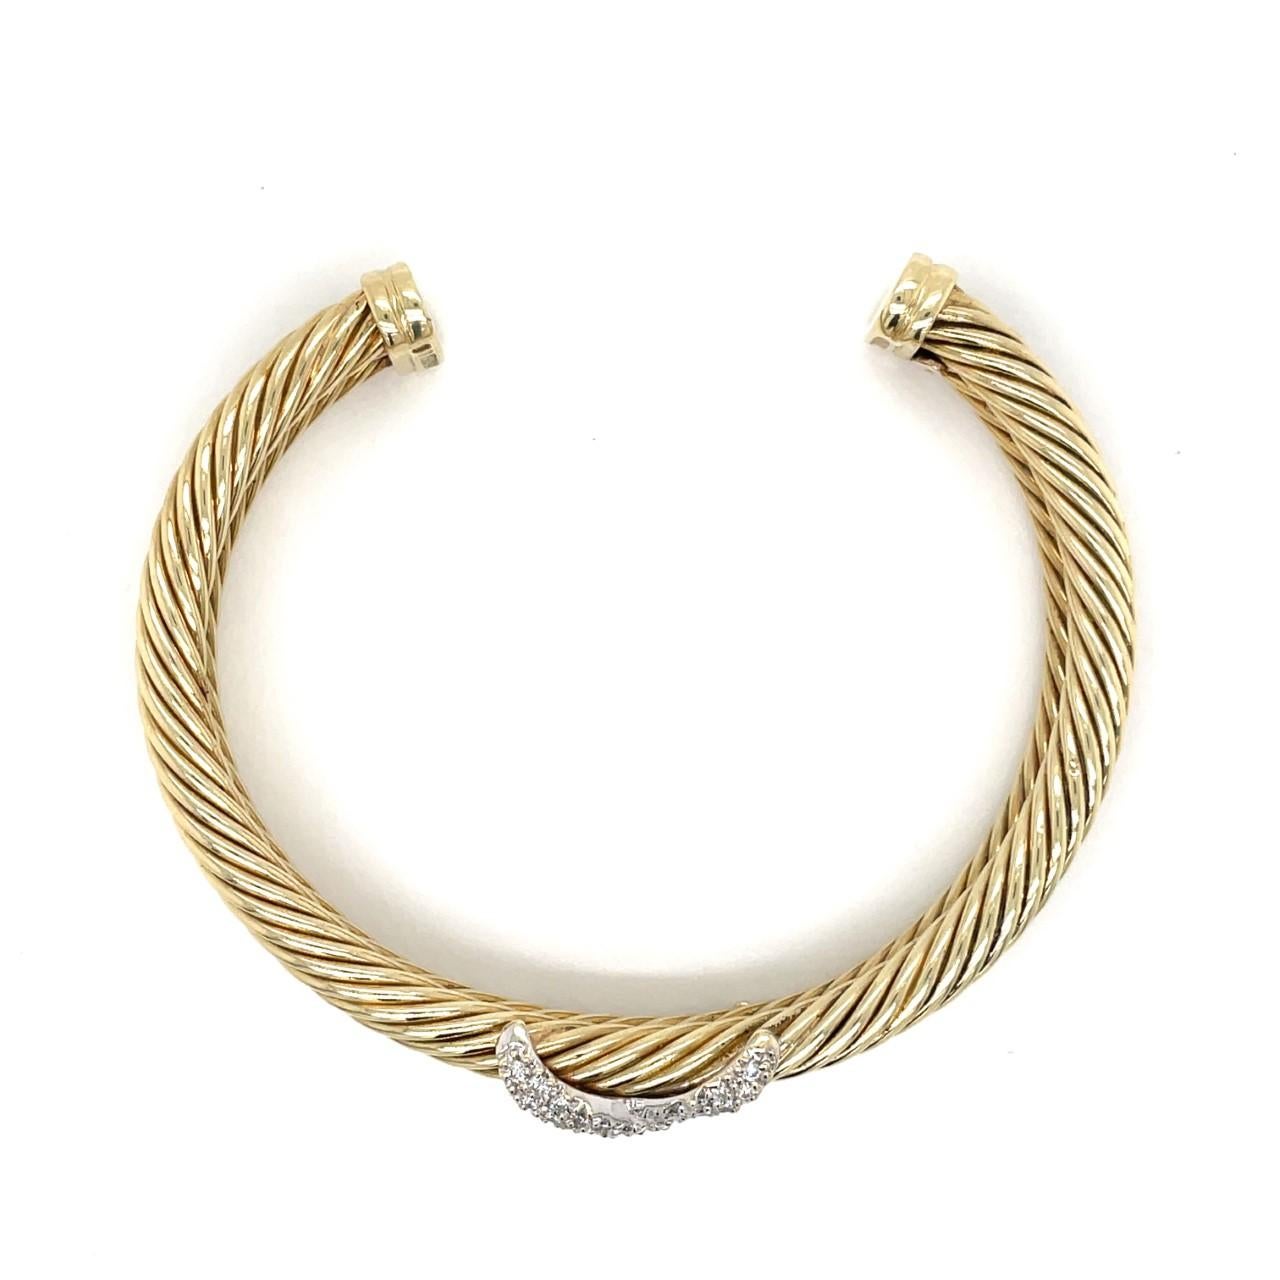 David Yurman 14k Yellow Gold Crossover Cable Bracelet with Pave Diamonds 1